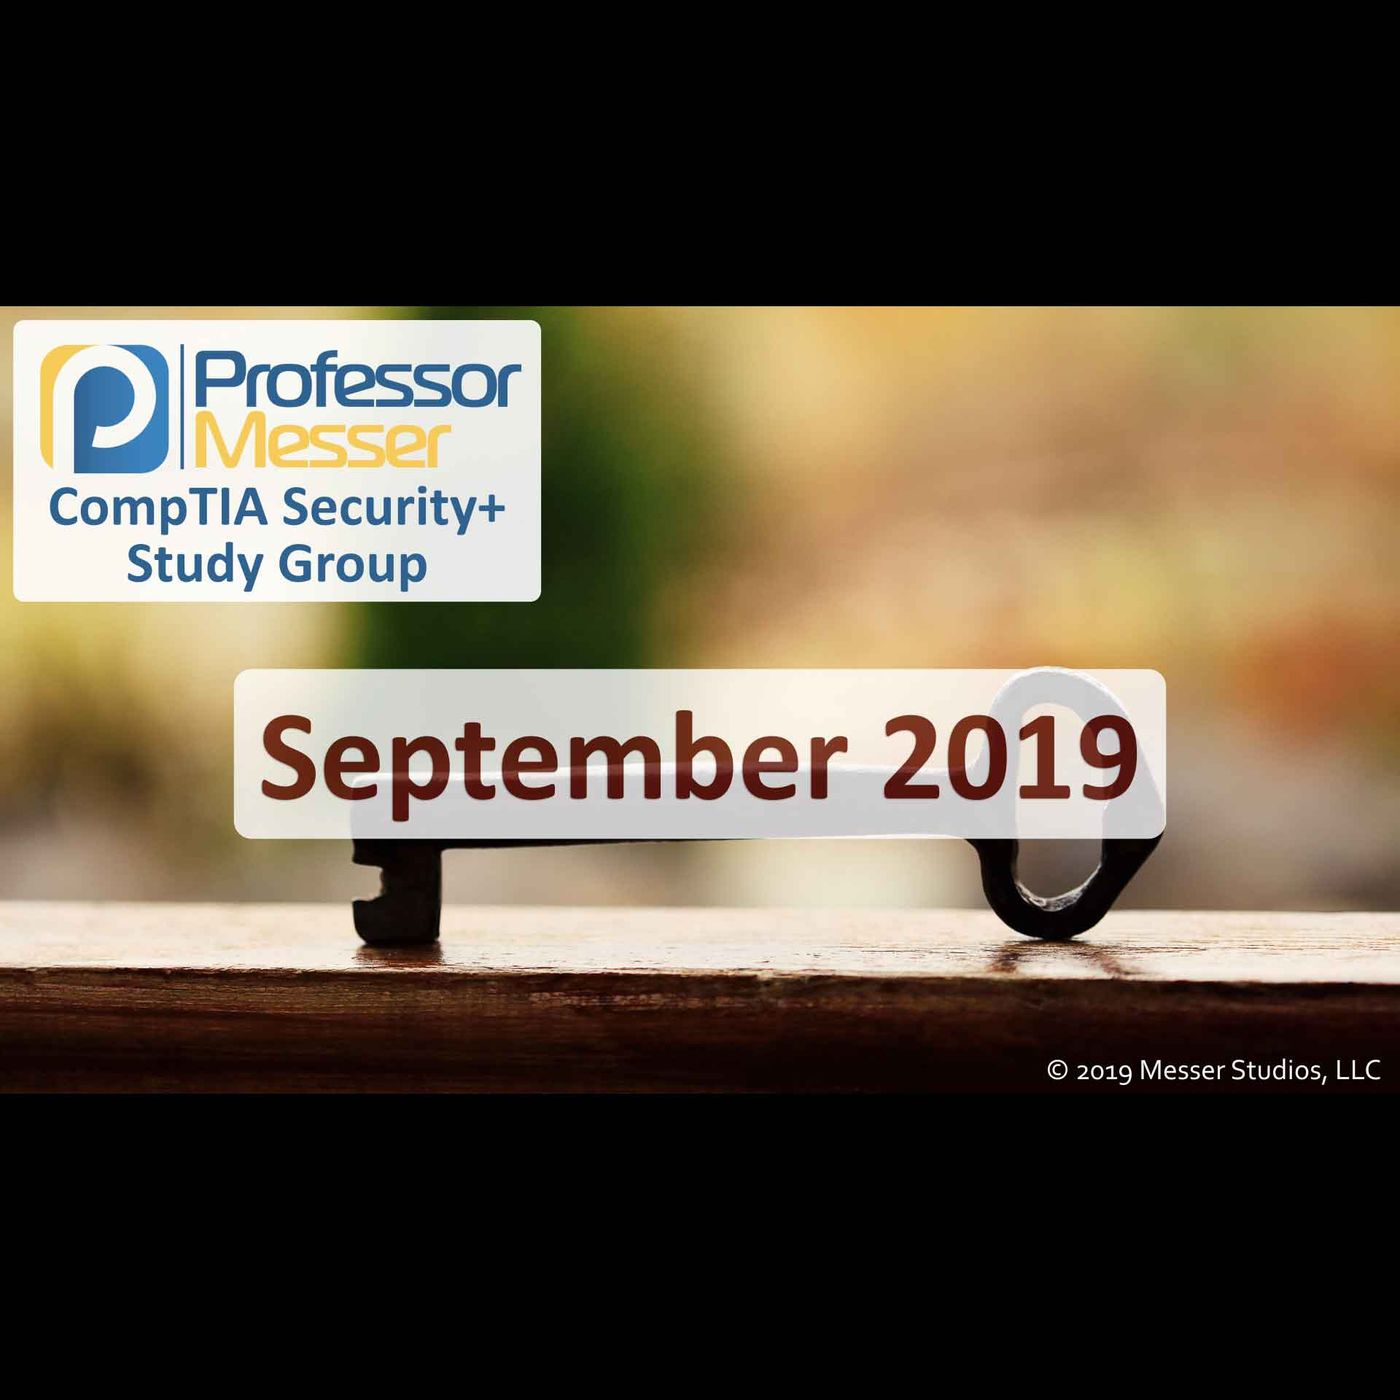 Professor Messer's Security+ Study Group - September 2019